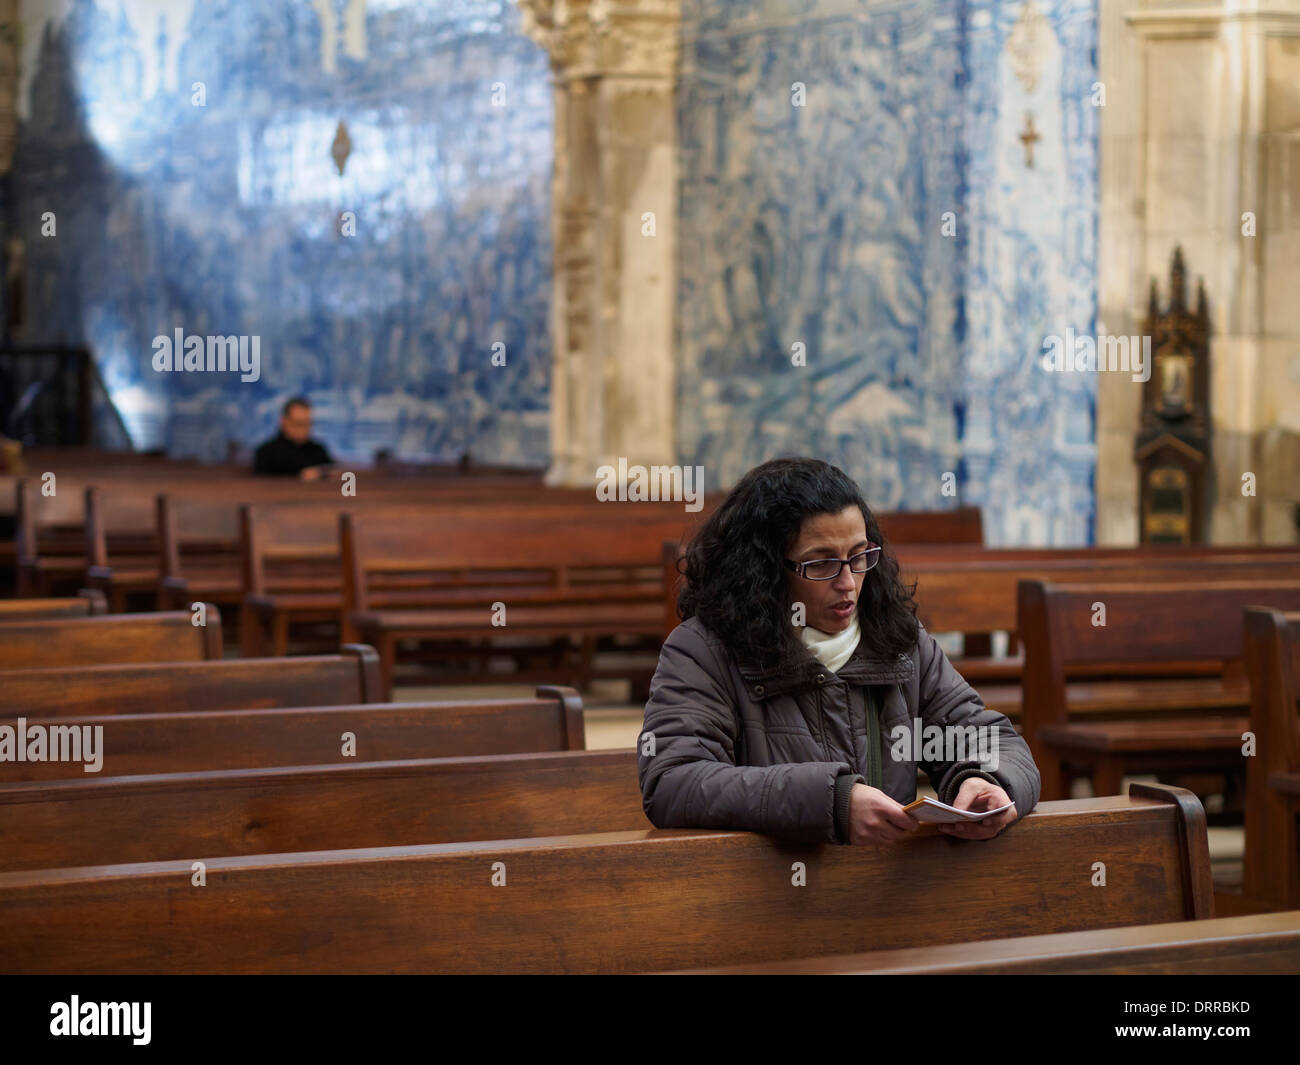 Woman praying in church Stock Photo